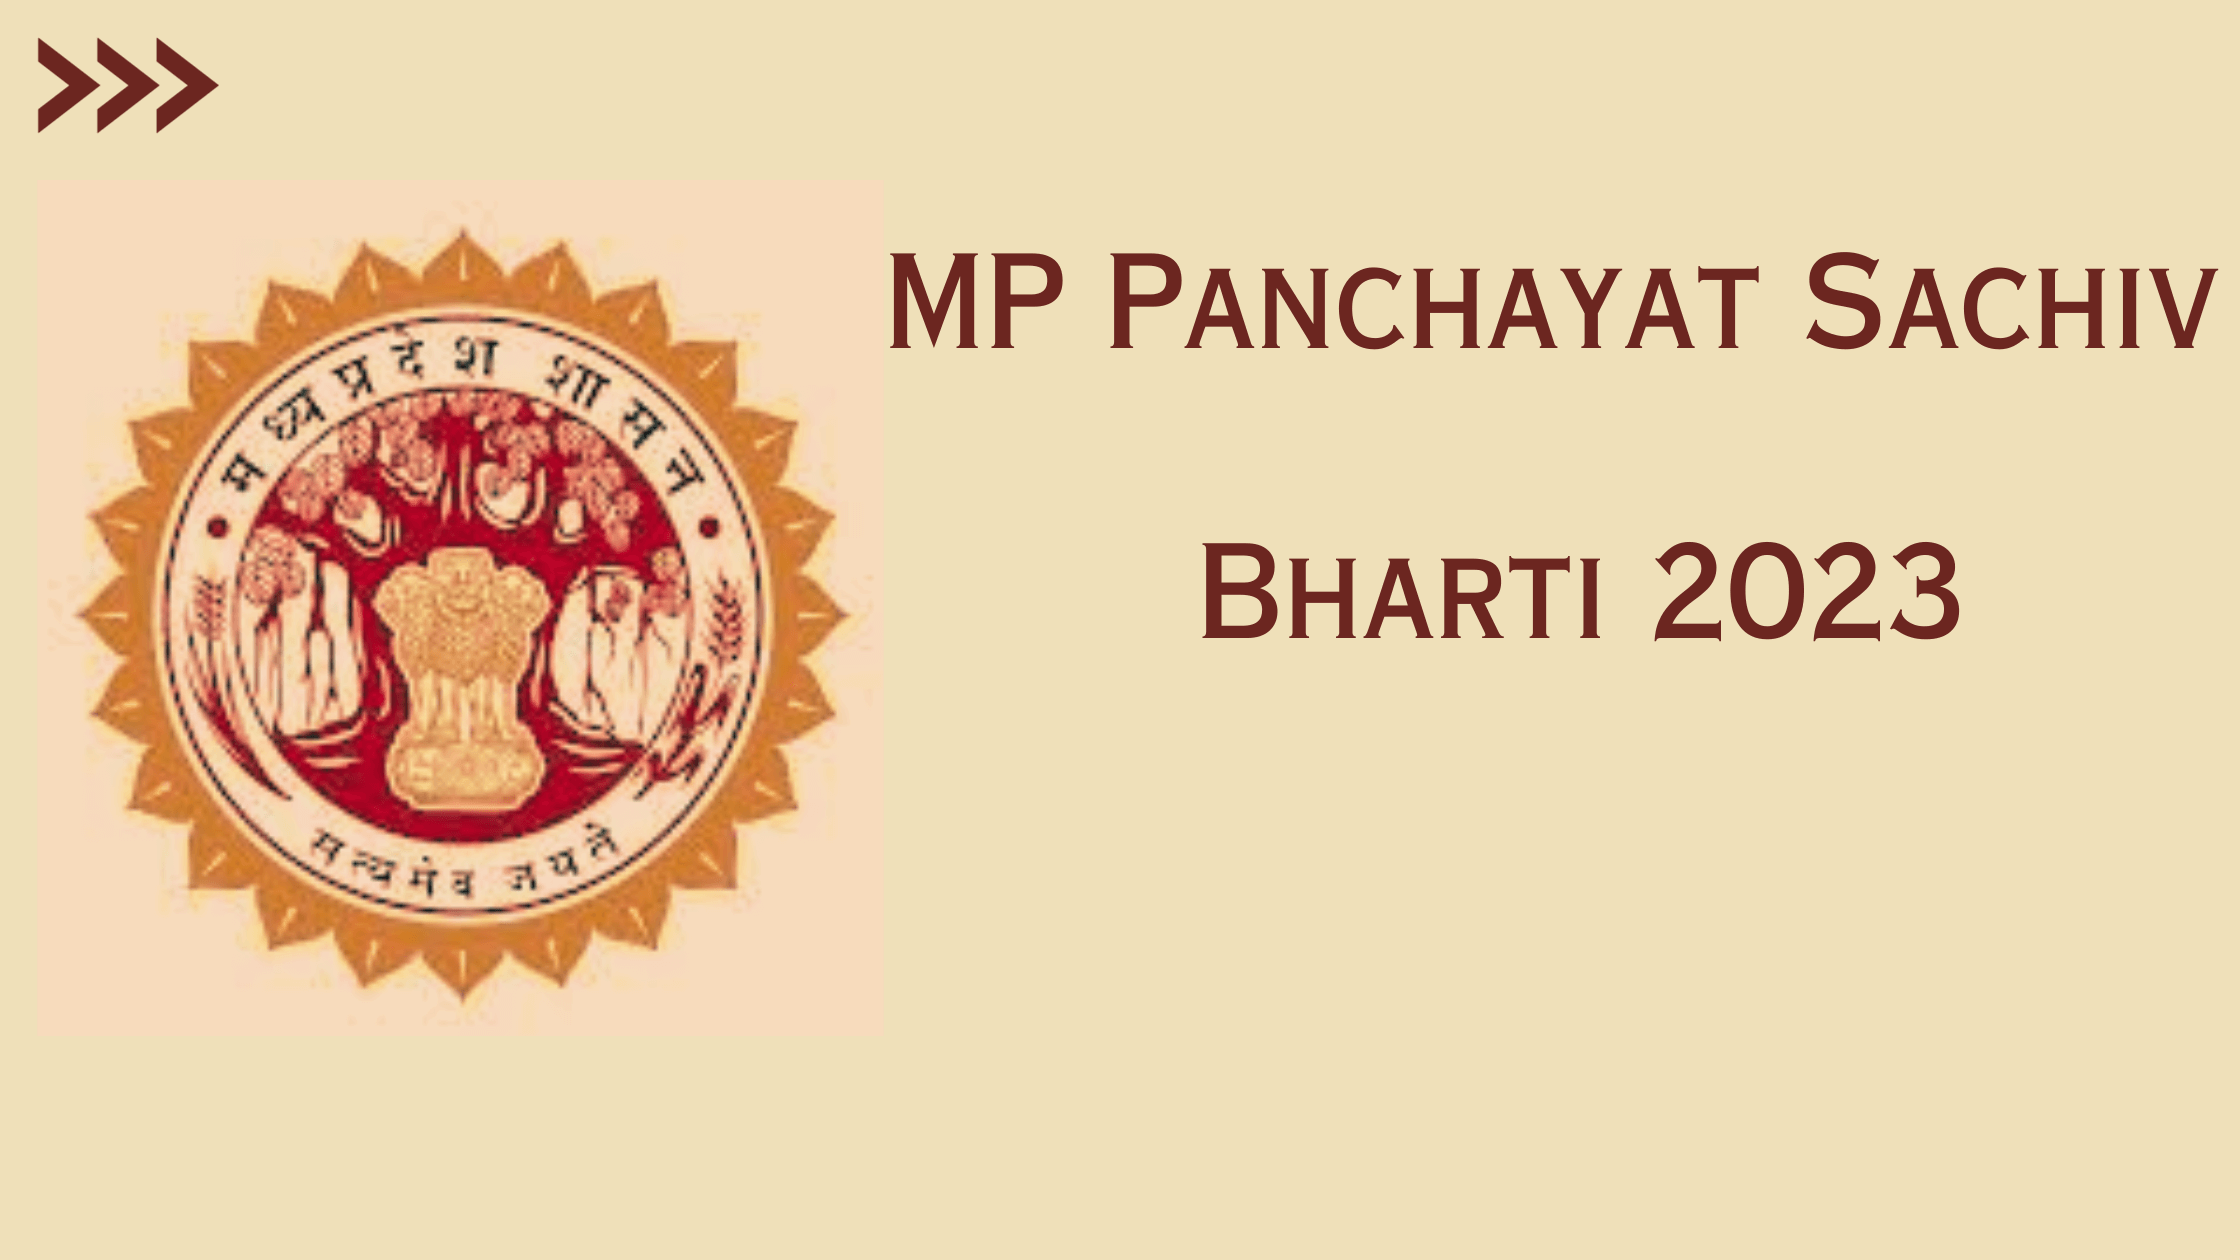 MP Panchayat Sachiv Bharti 2023